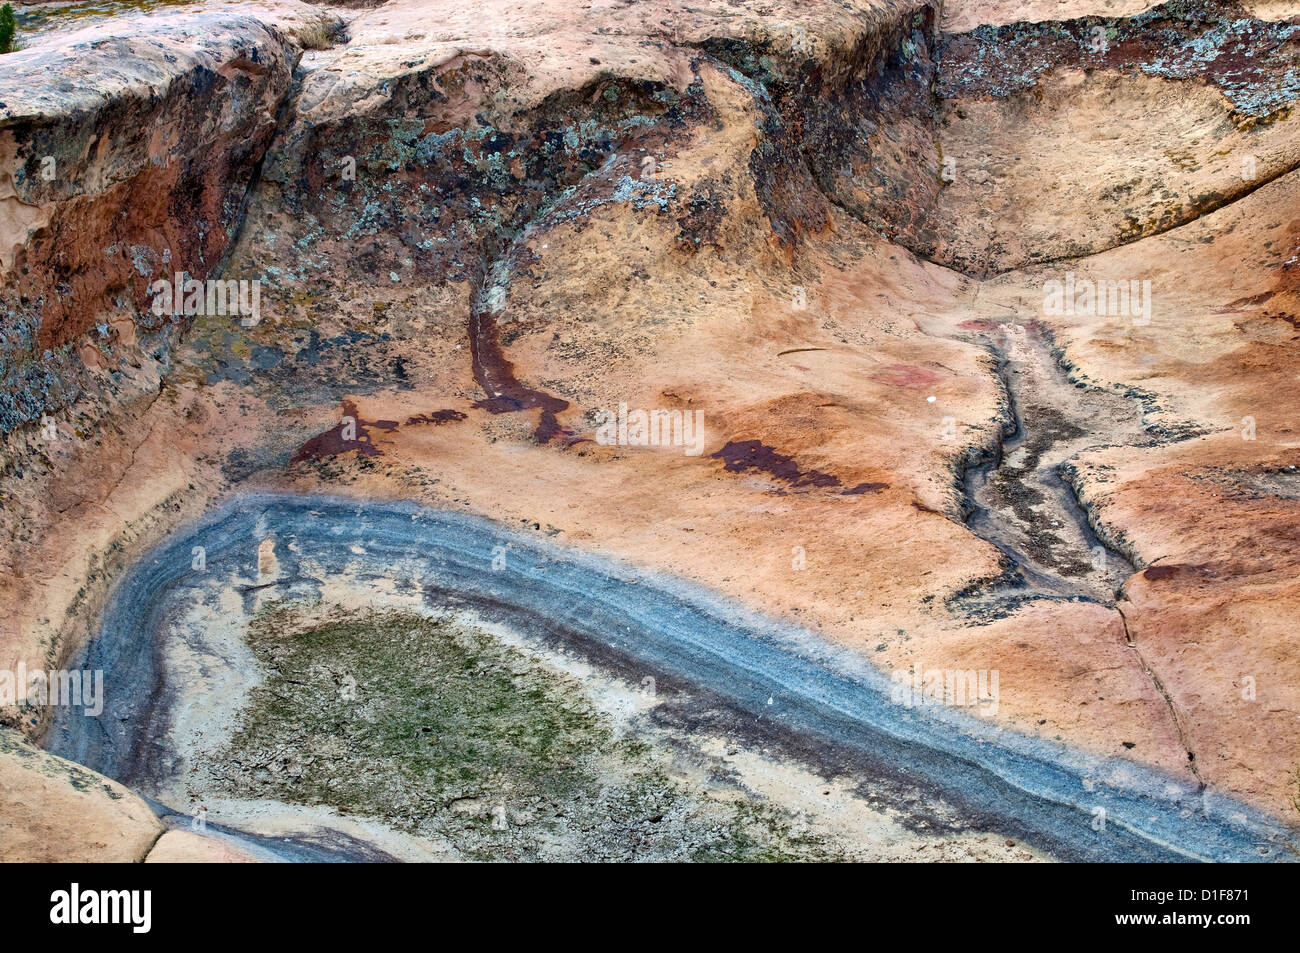 Dry tinaja (pothole) at Sandstone Bluffs, El Malpais National Monument, New Mexico, USA Stock Photo